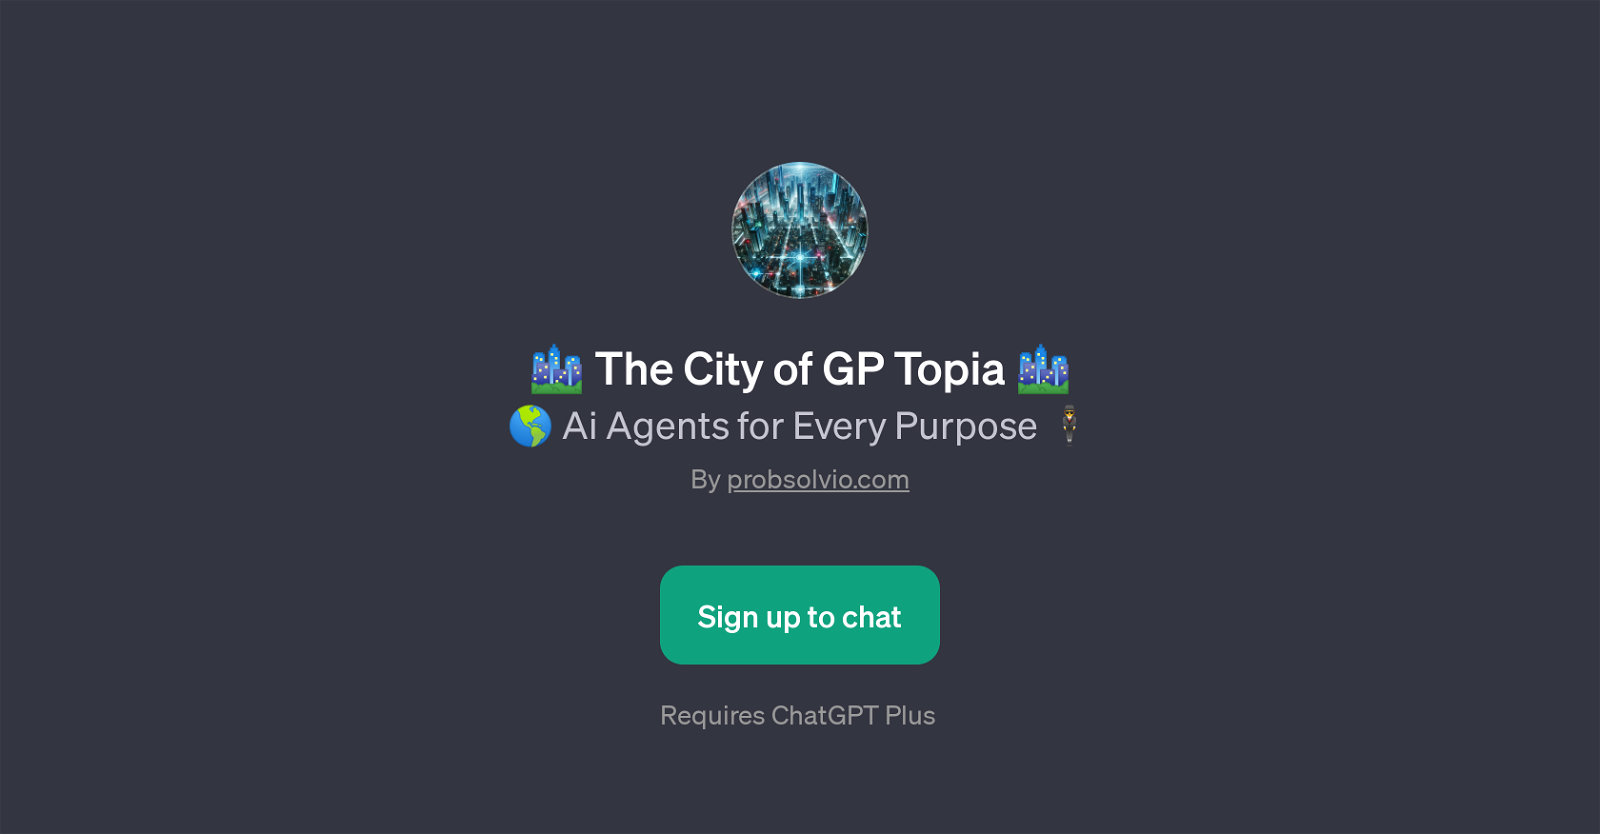 The City of GP Topia website